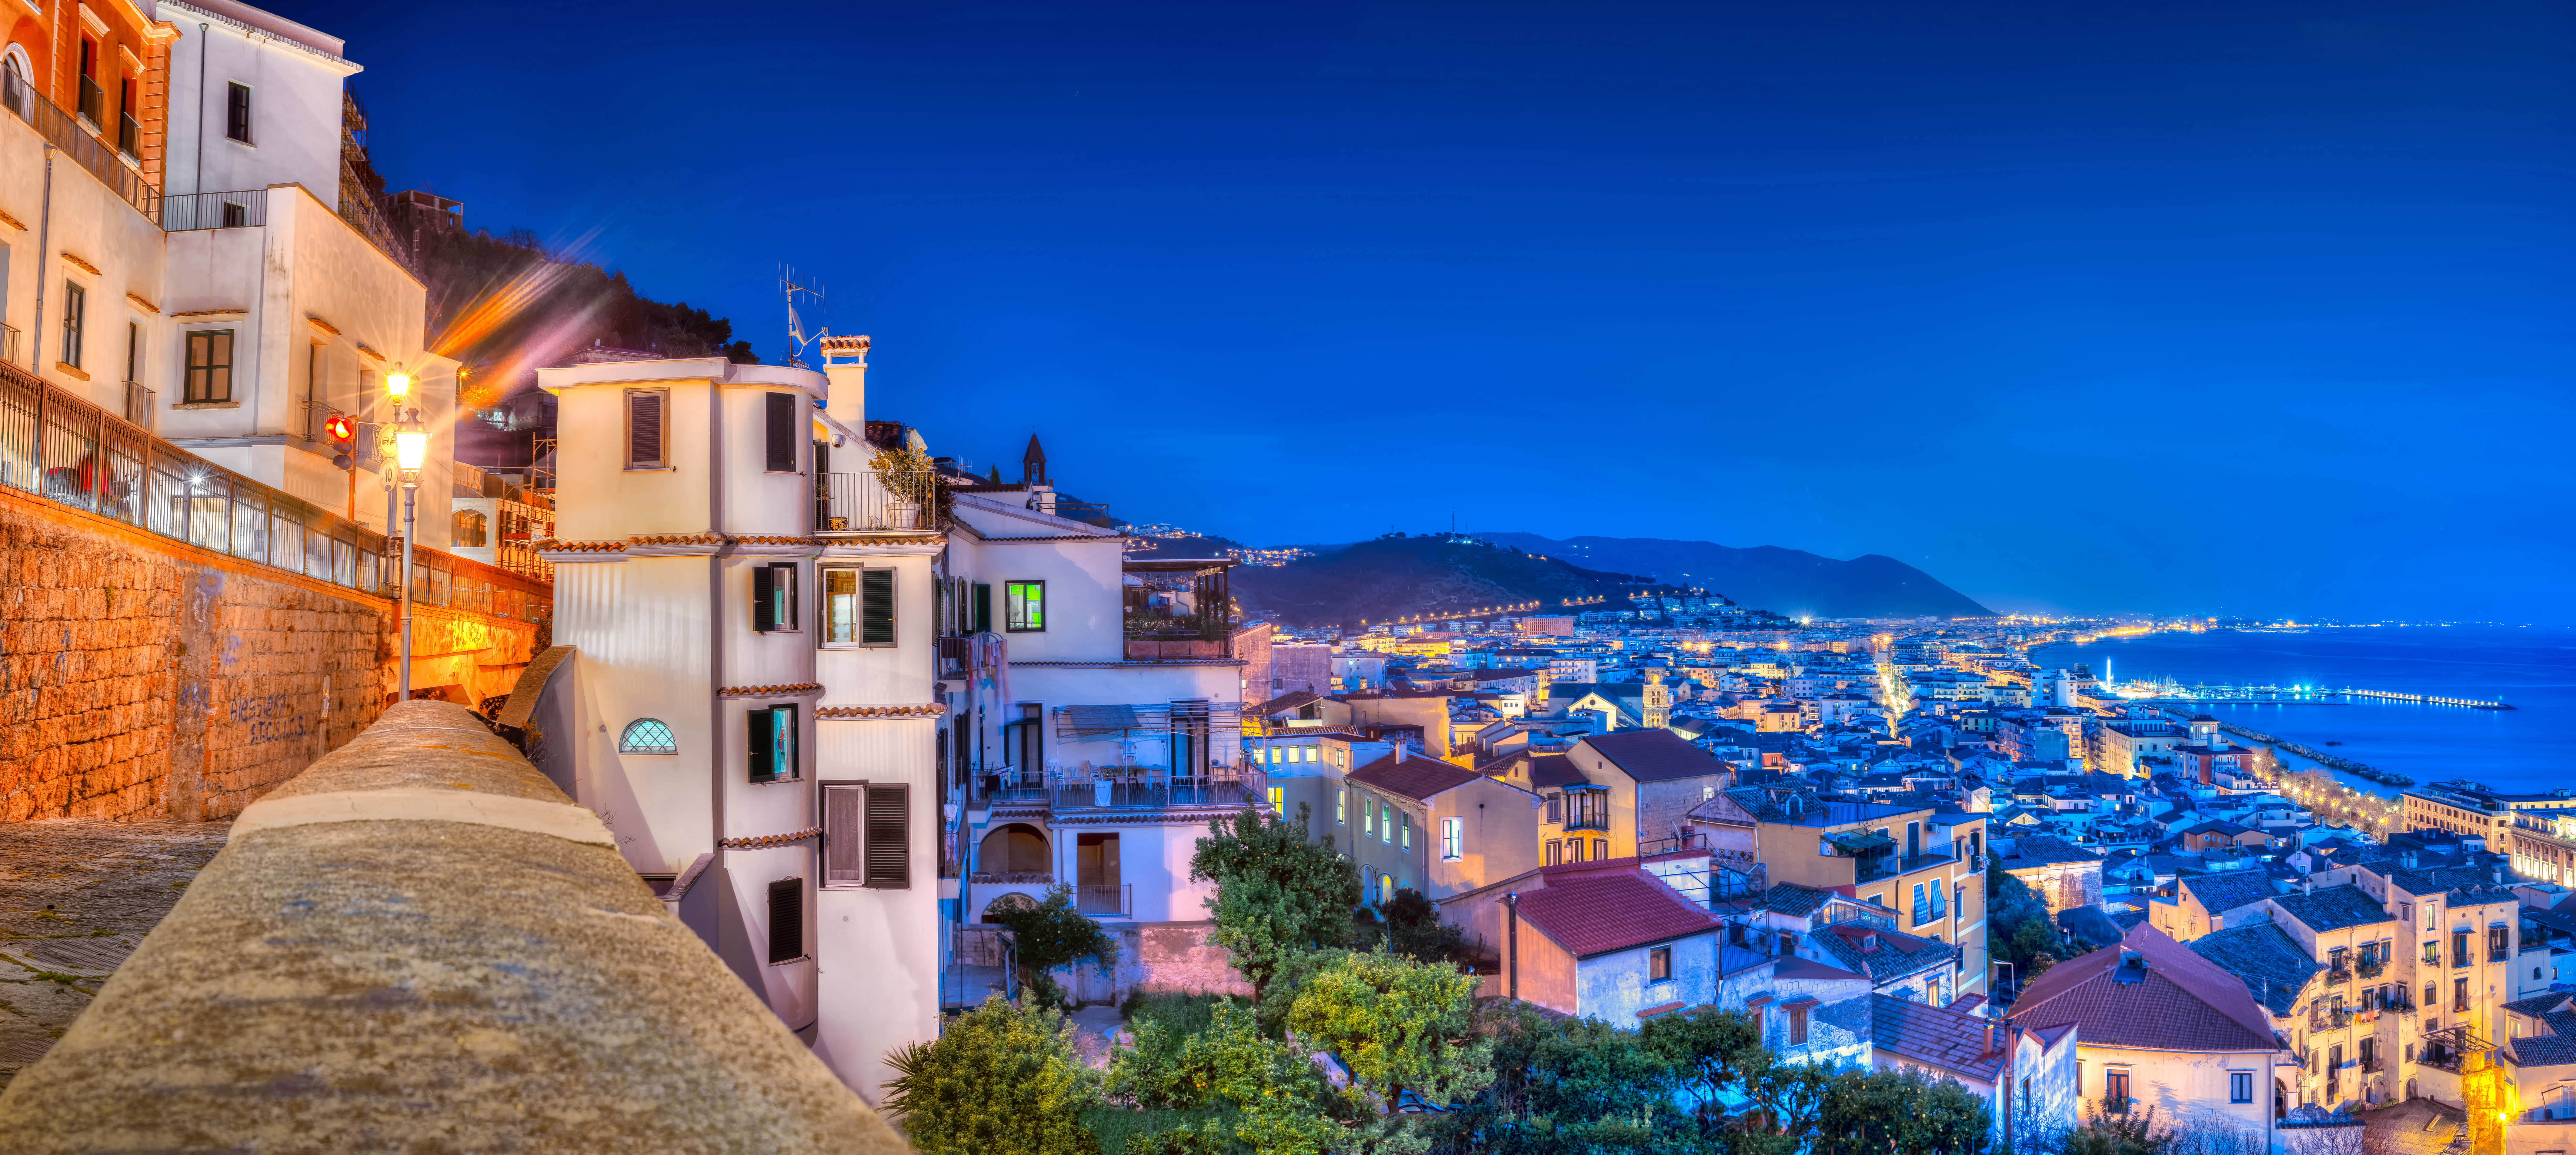 Amalfi Town Italy Night Horizon House 8500x3812